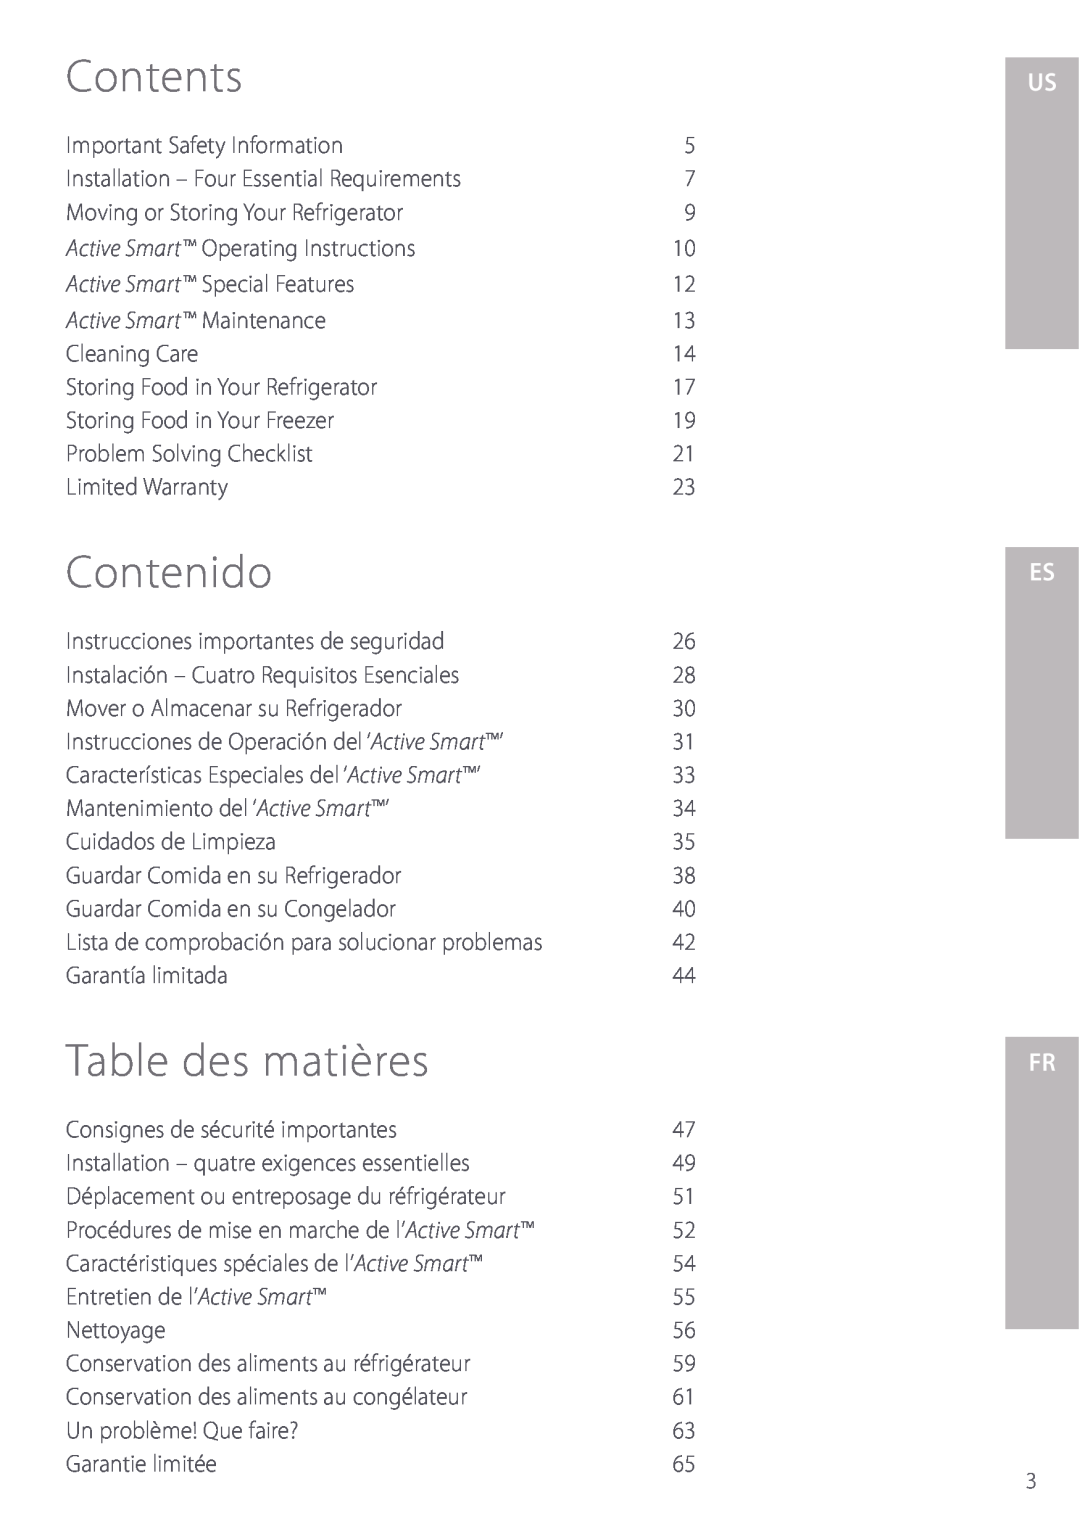 Fisher & Paykel manual Contents, Contenido, Table des matières, Active Smart Maintenance 